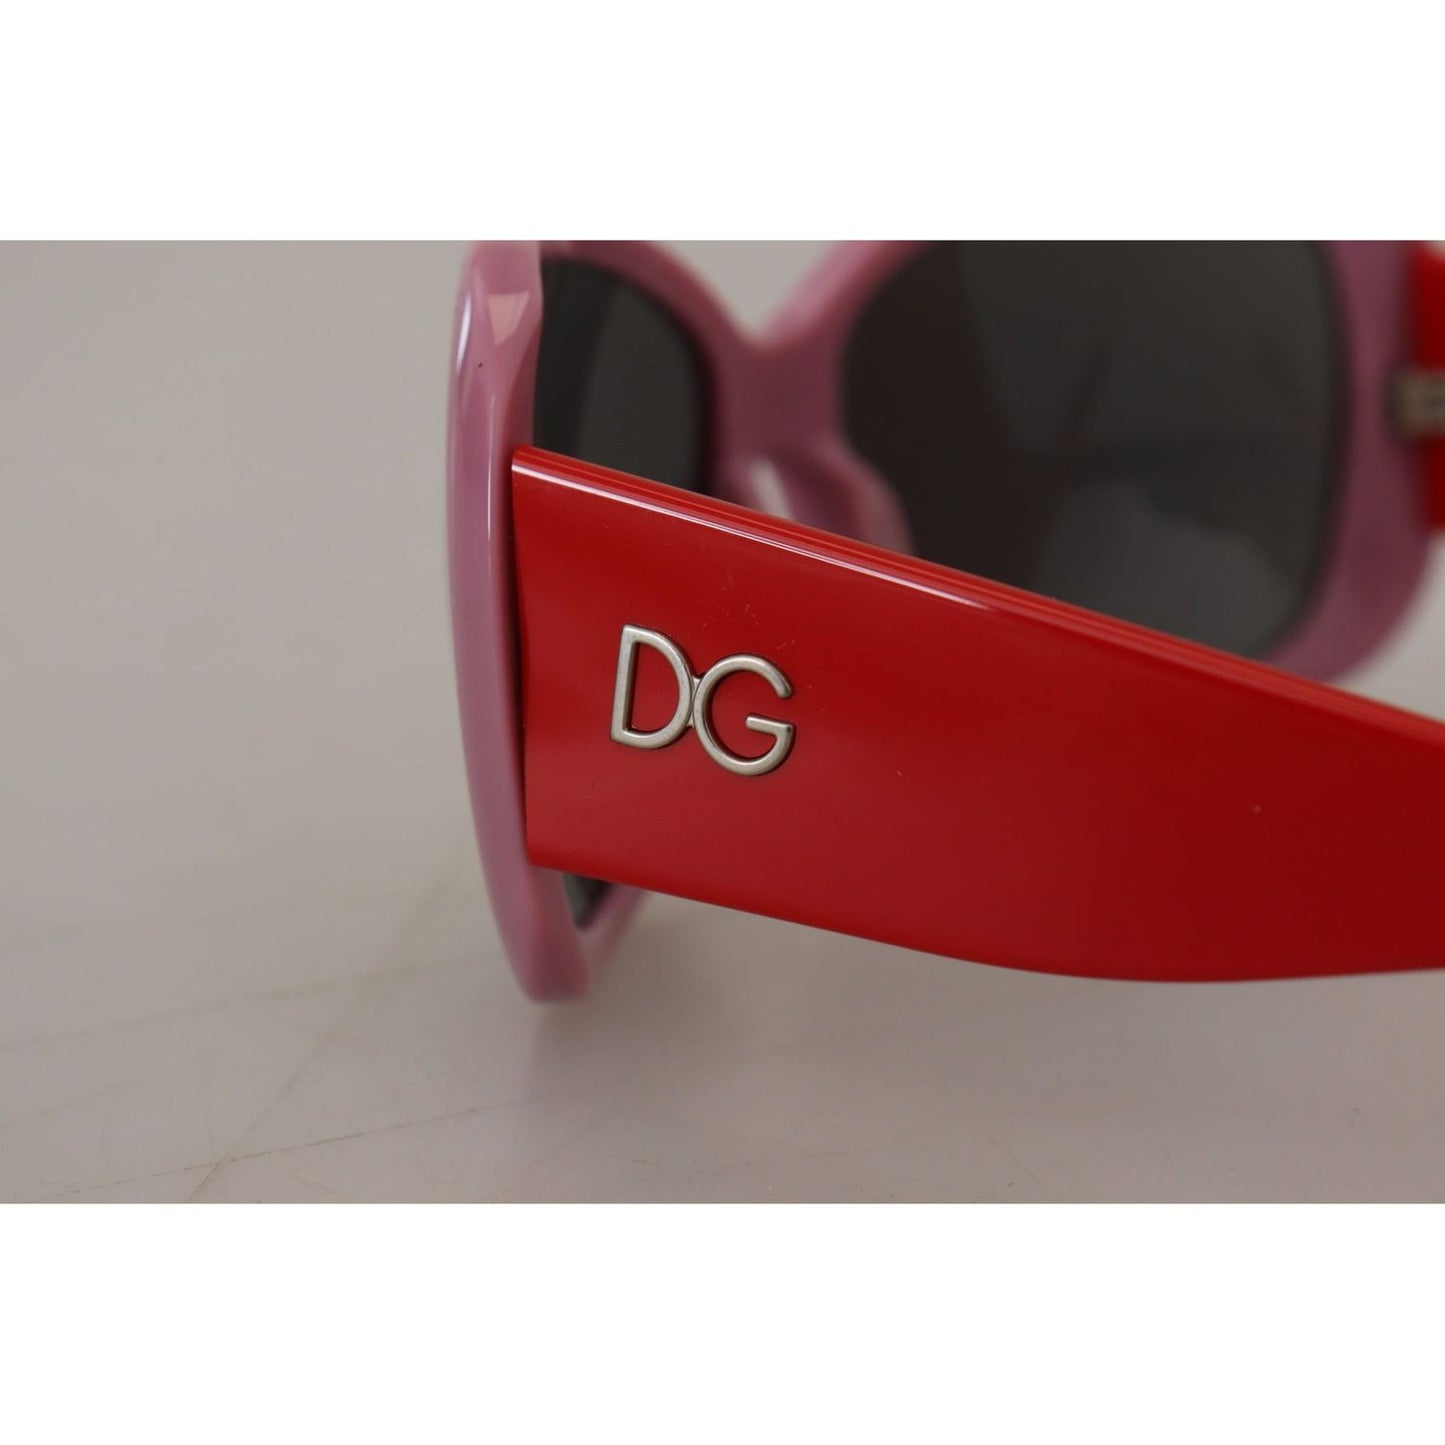 Dolce & Gabbana Chic Oversized UV-Protection Sunglasses pink-red-plastic-frame-oversized-dg4033-sunglasses IMG_4788-scaled-98776c57-ced.jpg